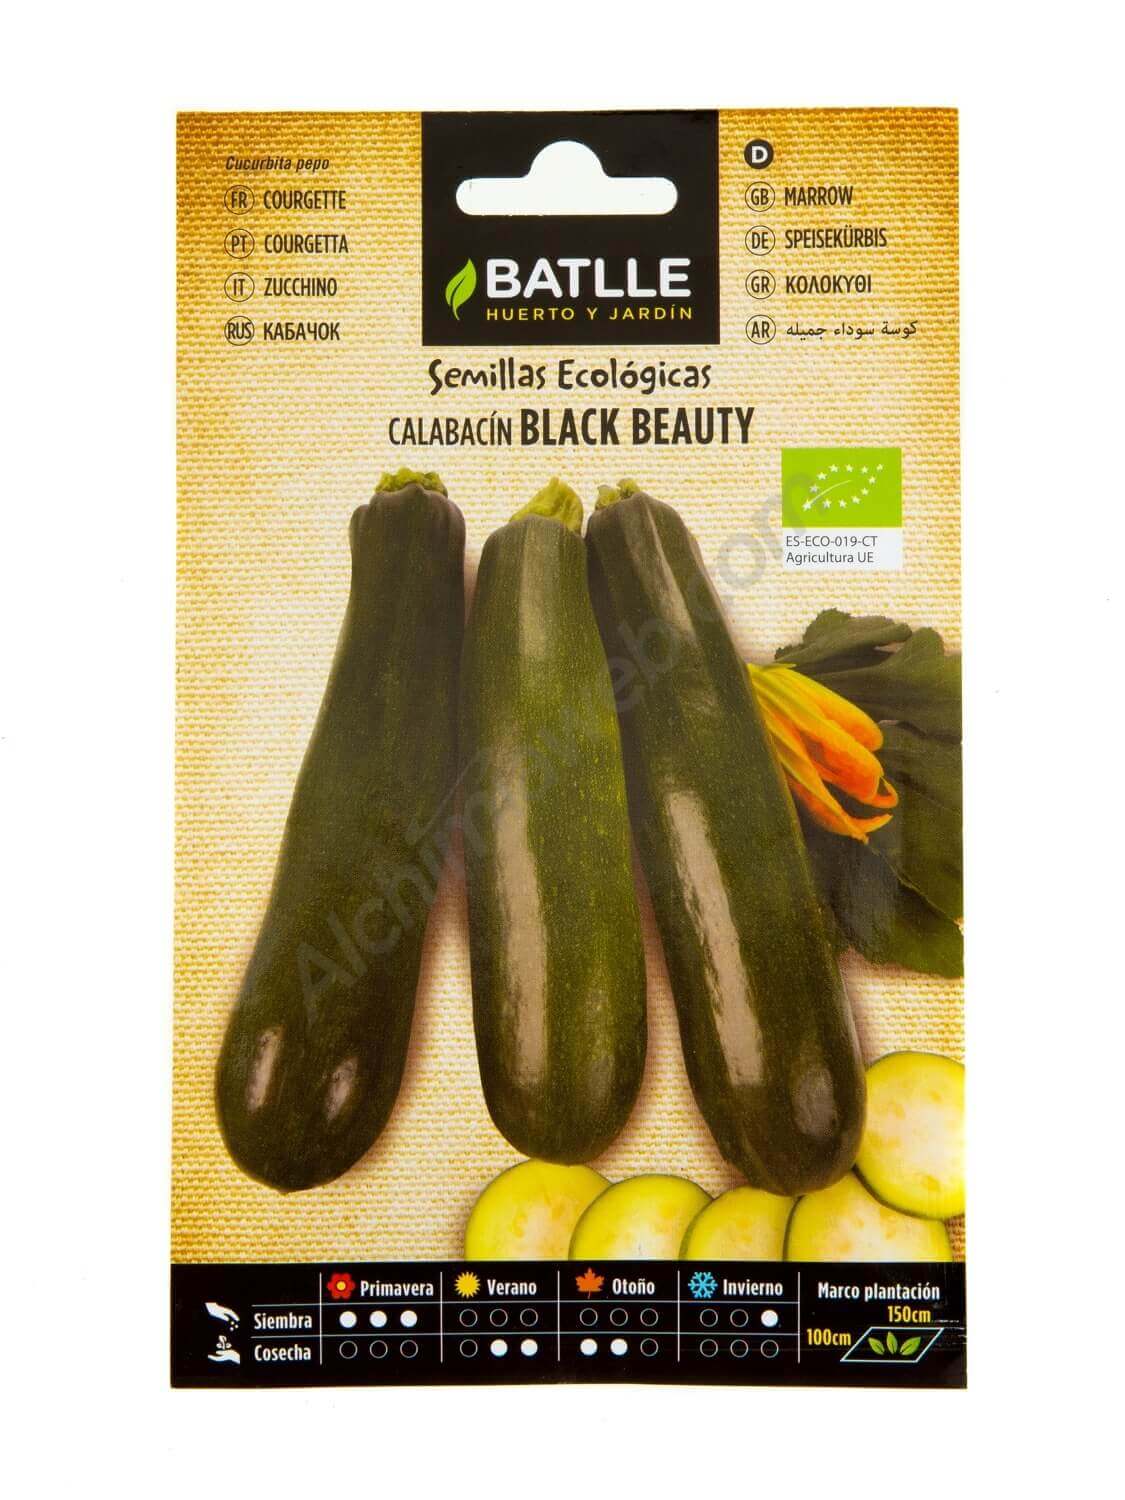 Batlle - Bio-Zucchinisamen 'Black Beauty'